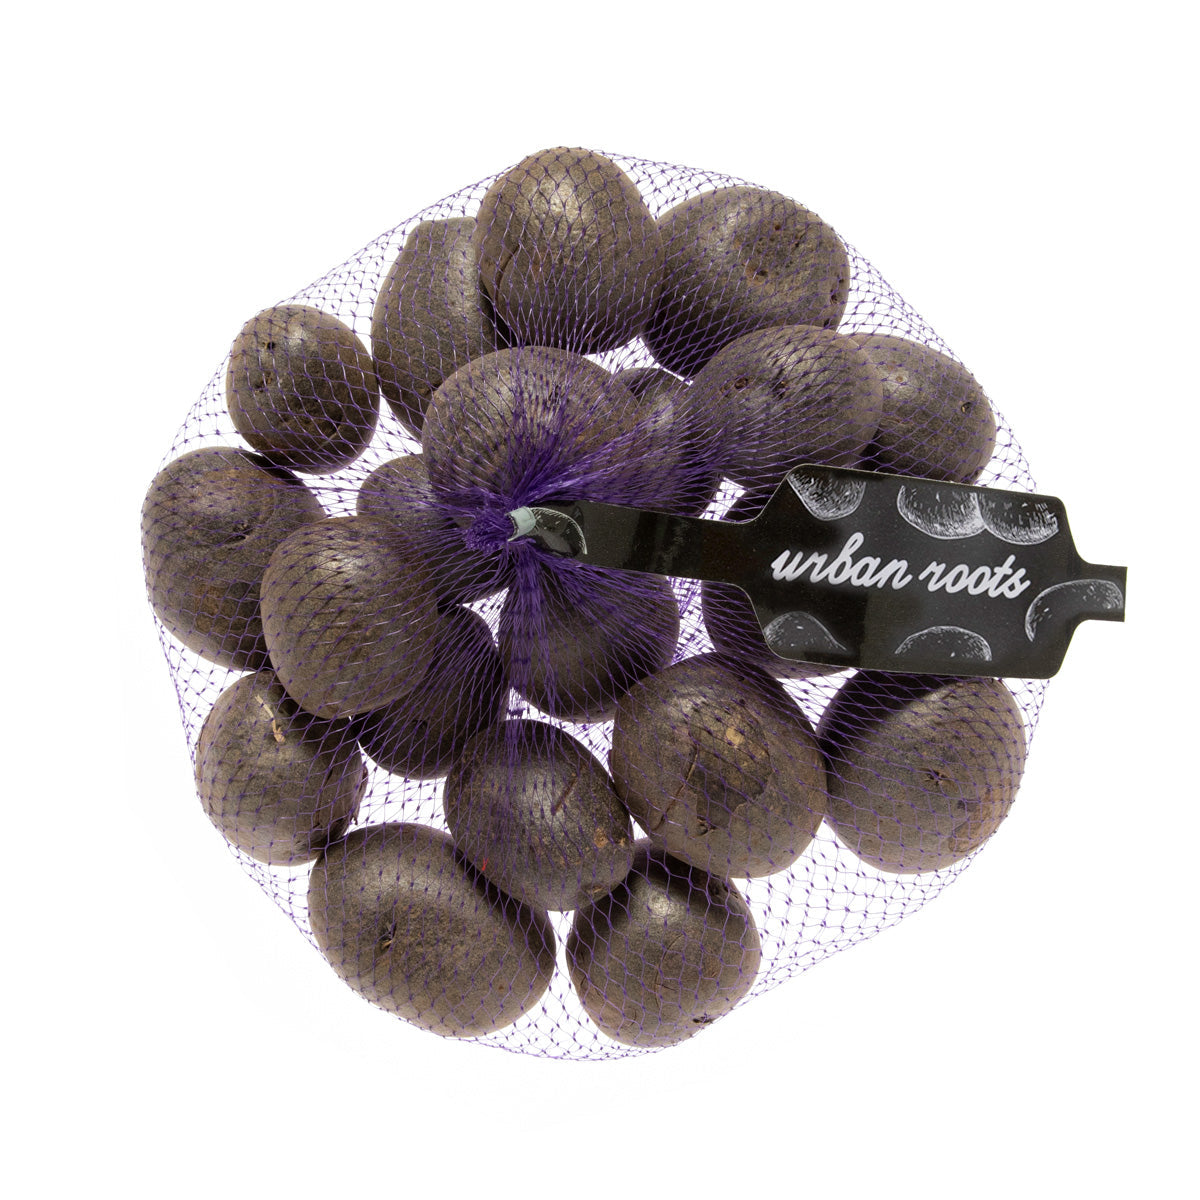 Urban Roots Purple Pee Wee Potatoes 24 0Z